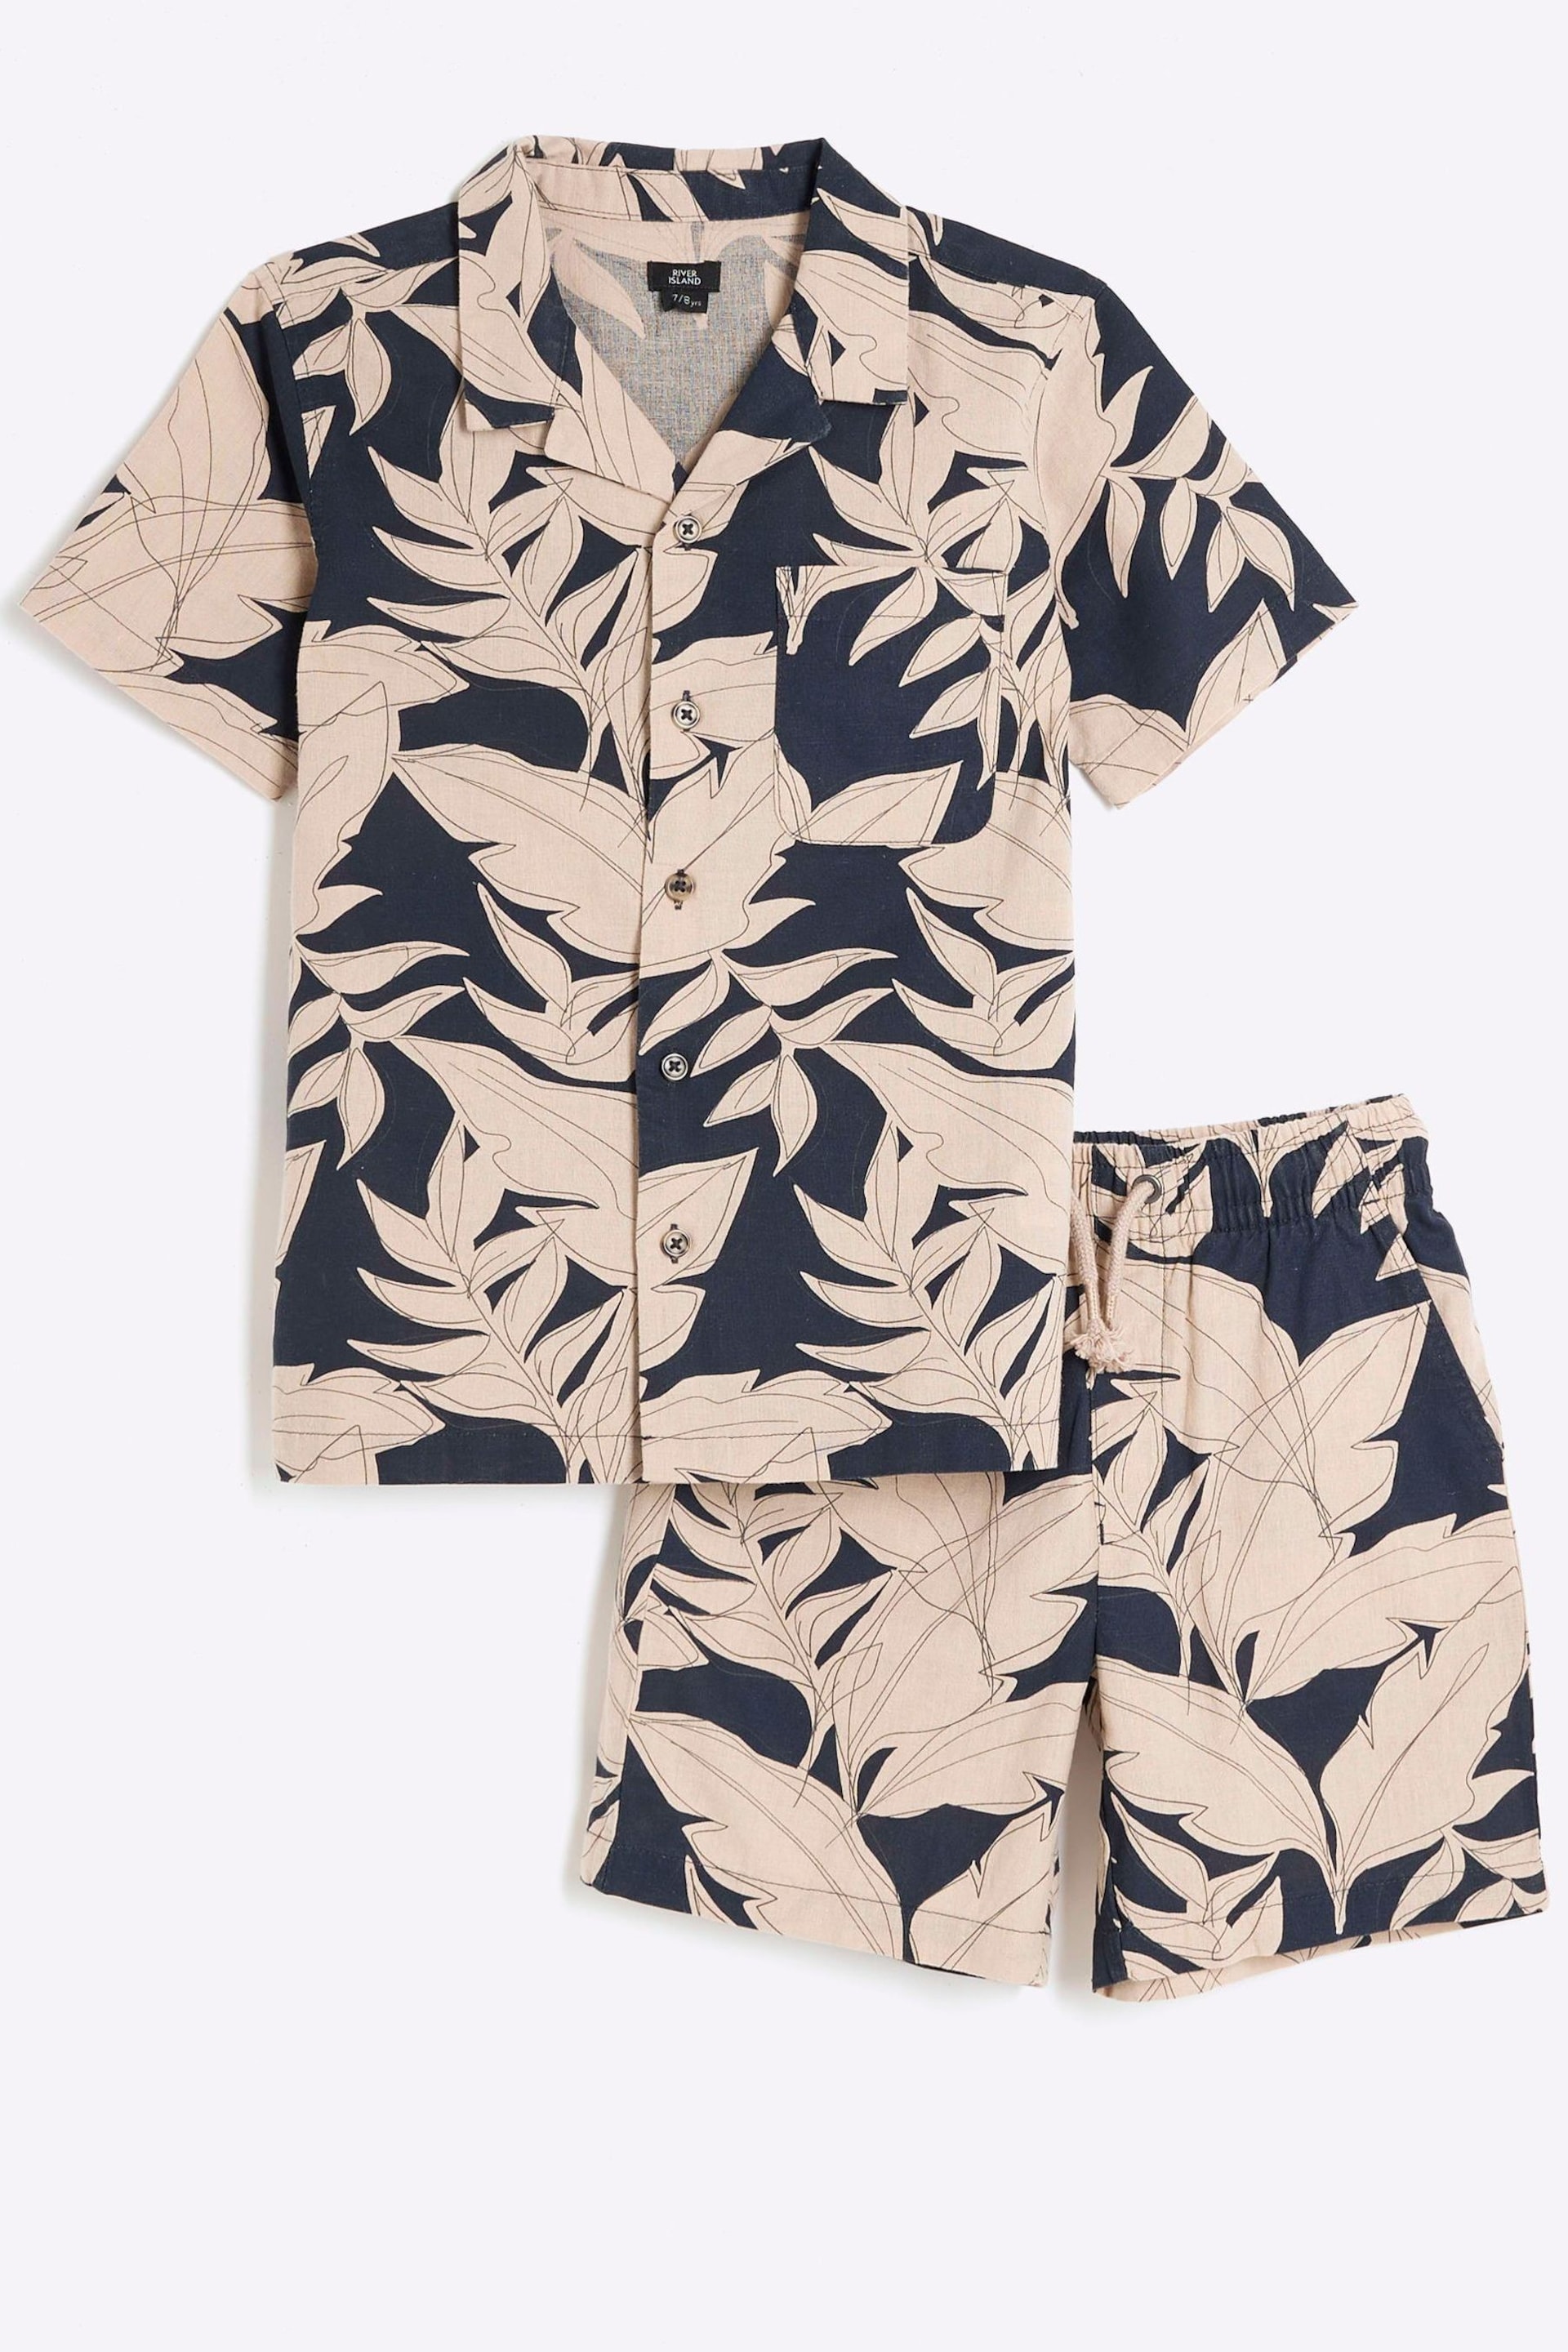 River Island Black Boys Leaf Print Shirt and Shorts Set - Image 1 of 4